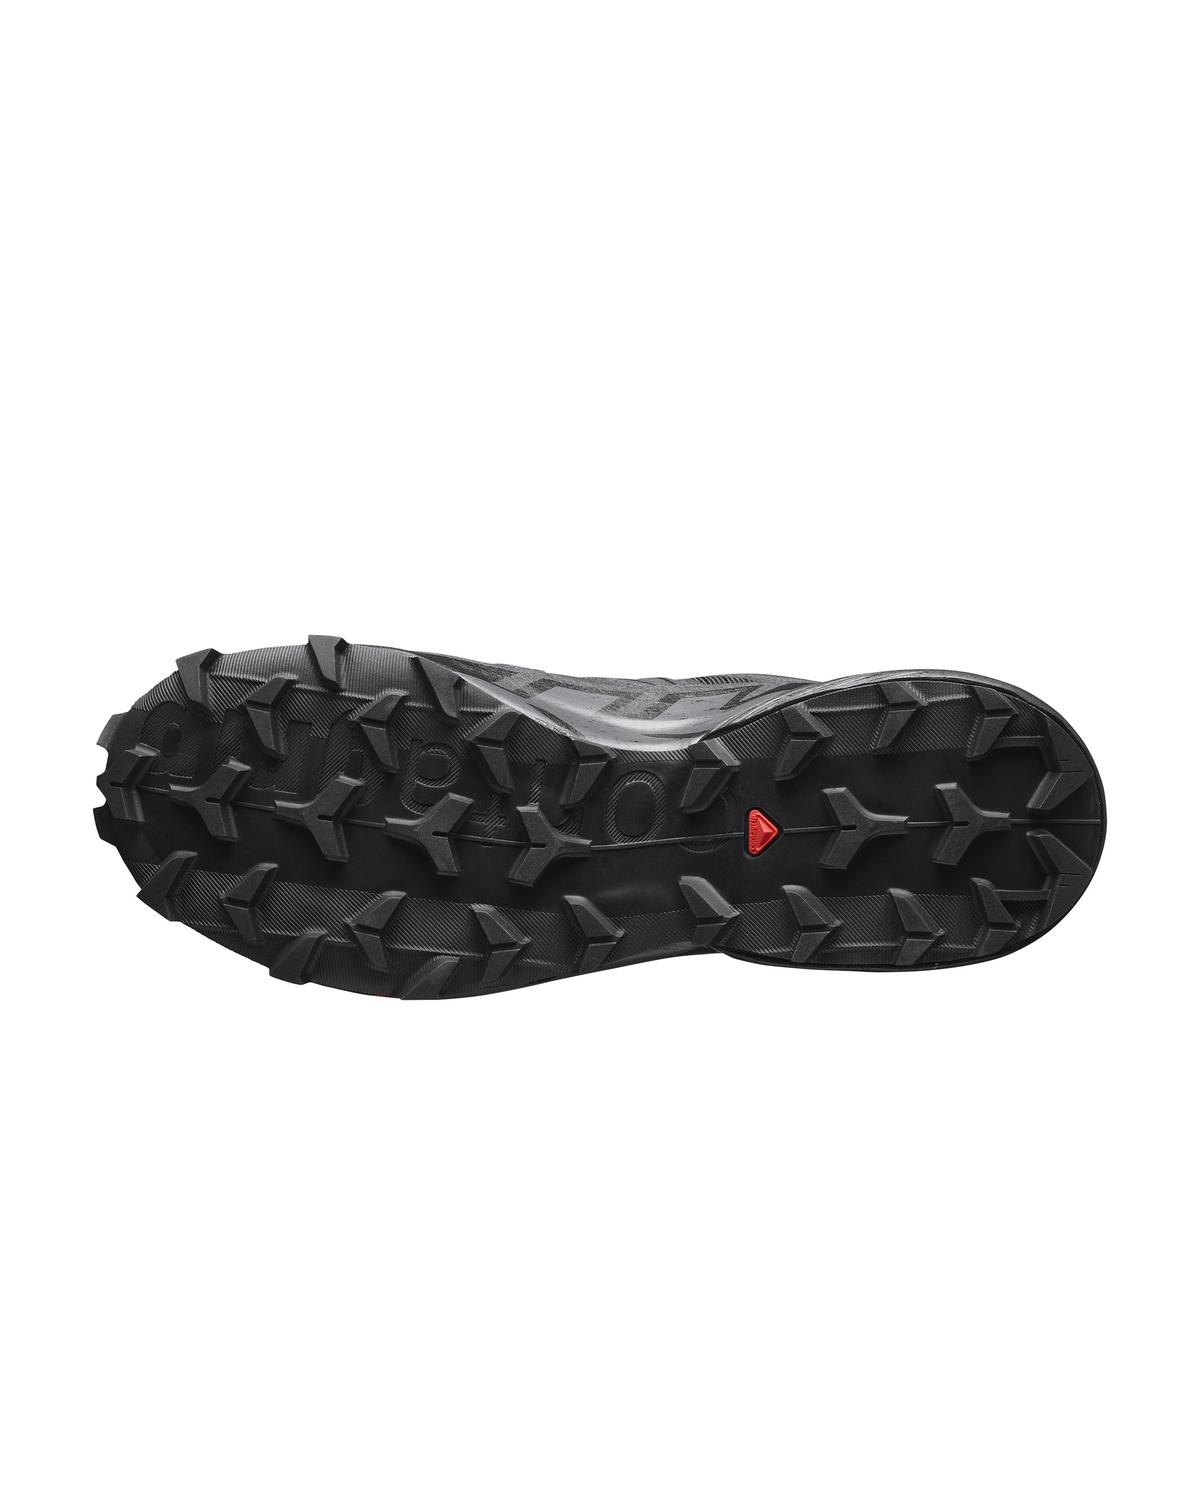 Salomon Women's Speedcross 6 Trail Running Shoes -  Black